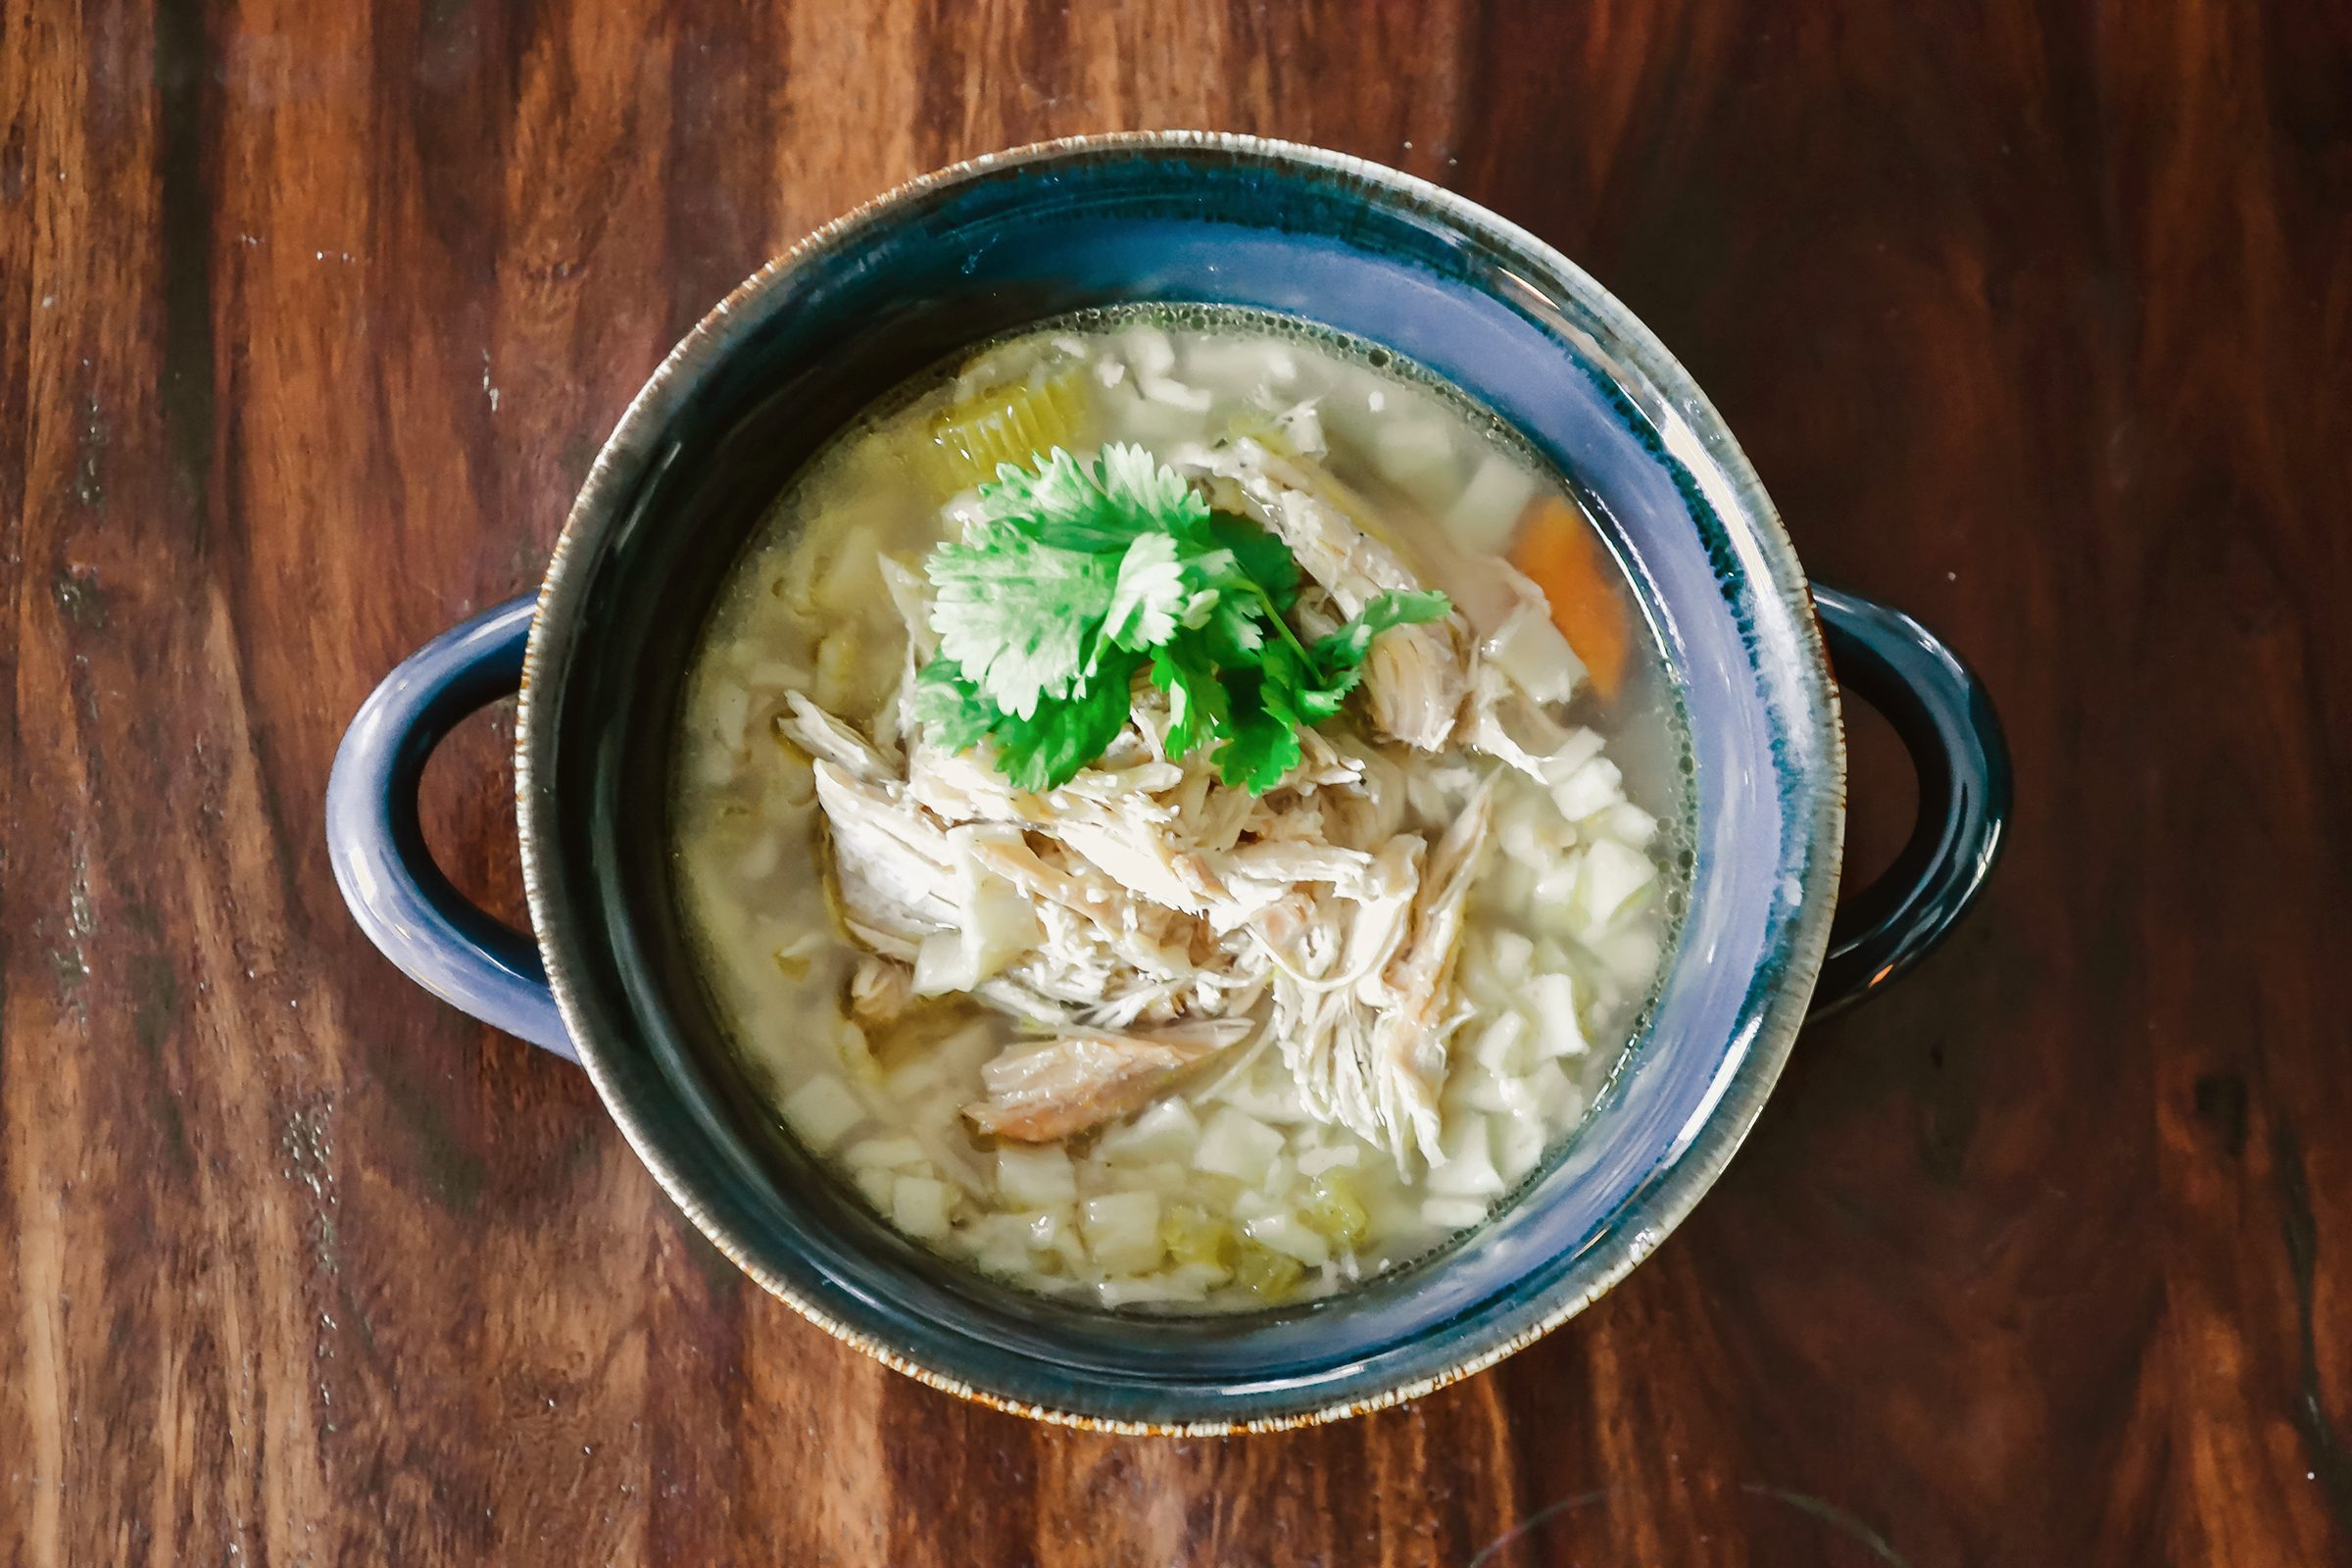 Easy Chicken Noodle Soup Mix in a Jar - Food Storage Moms